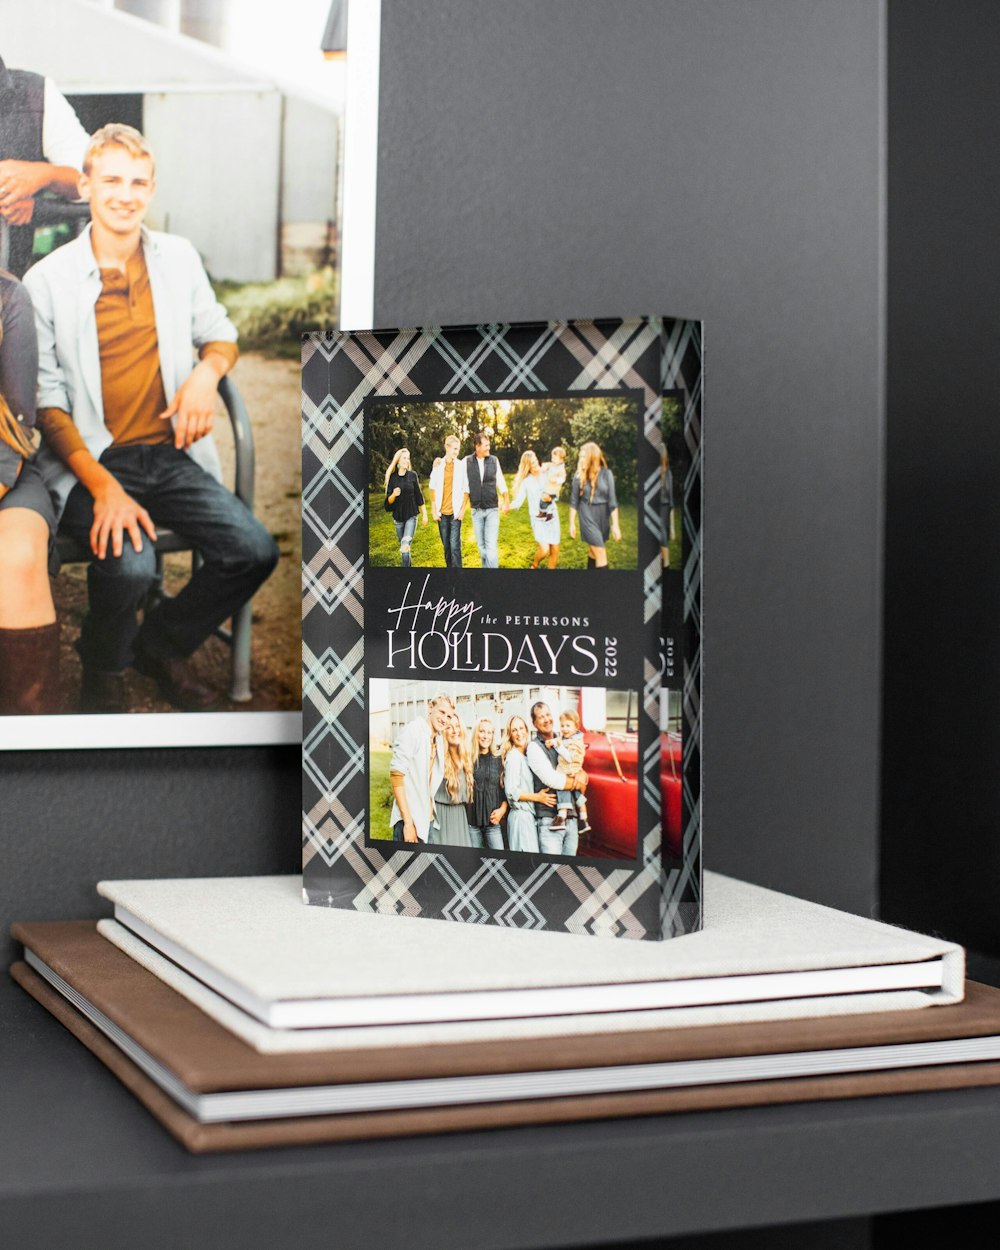 Plaid designer Acrylic Block with family portraits on black shelf